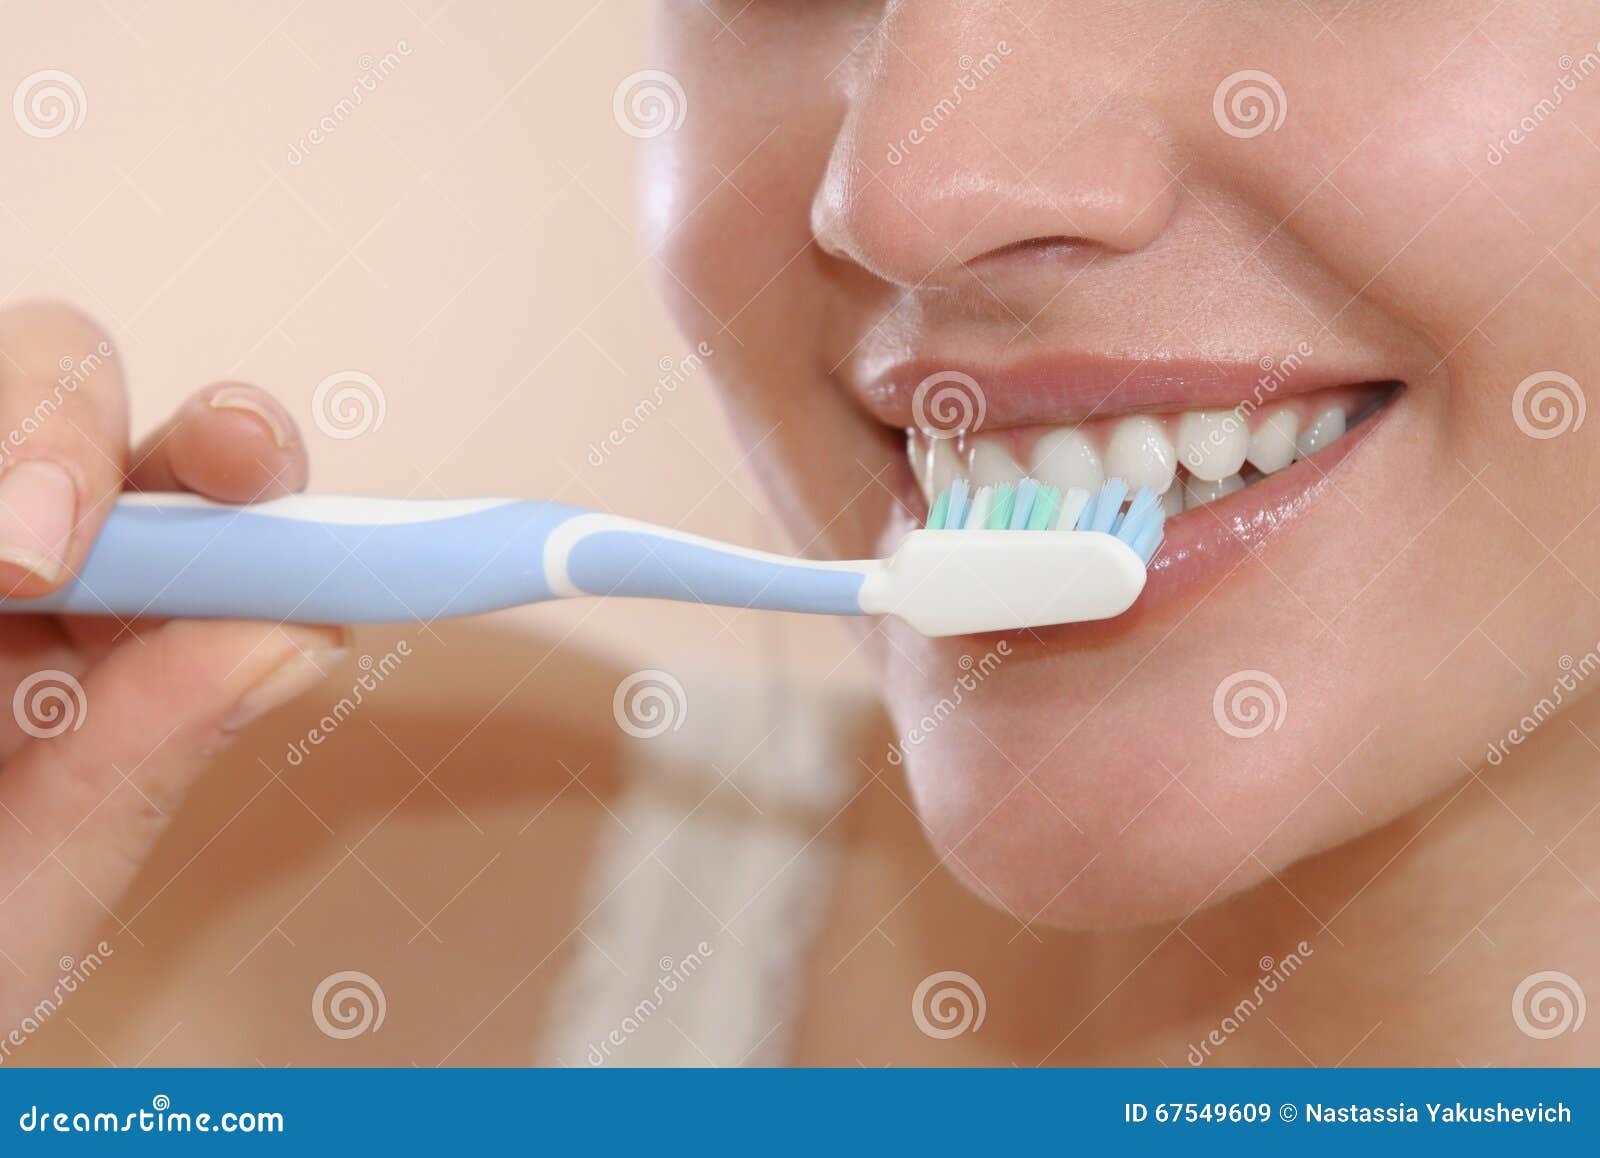 women brush your teeth